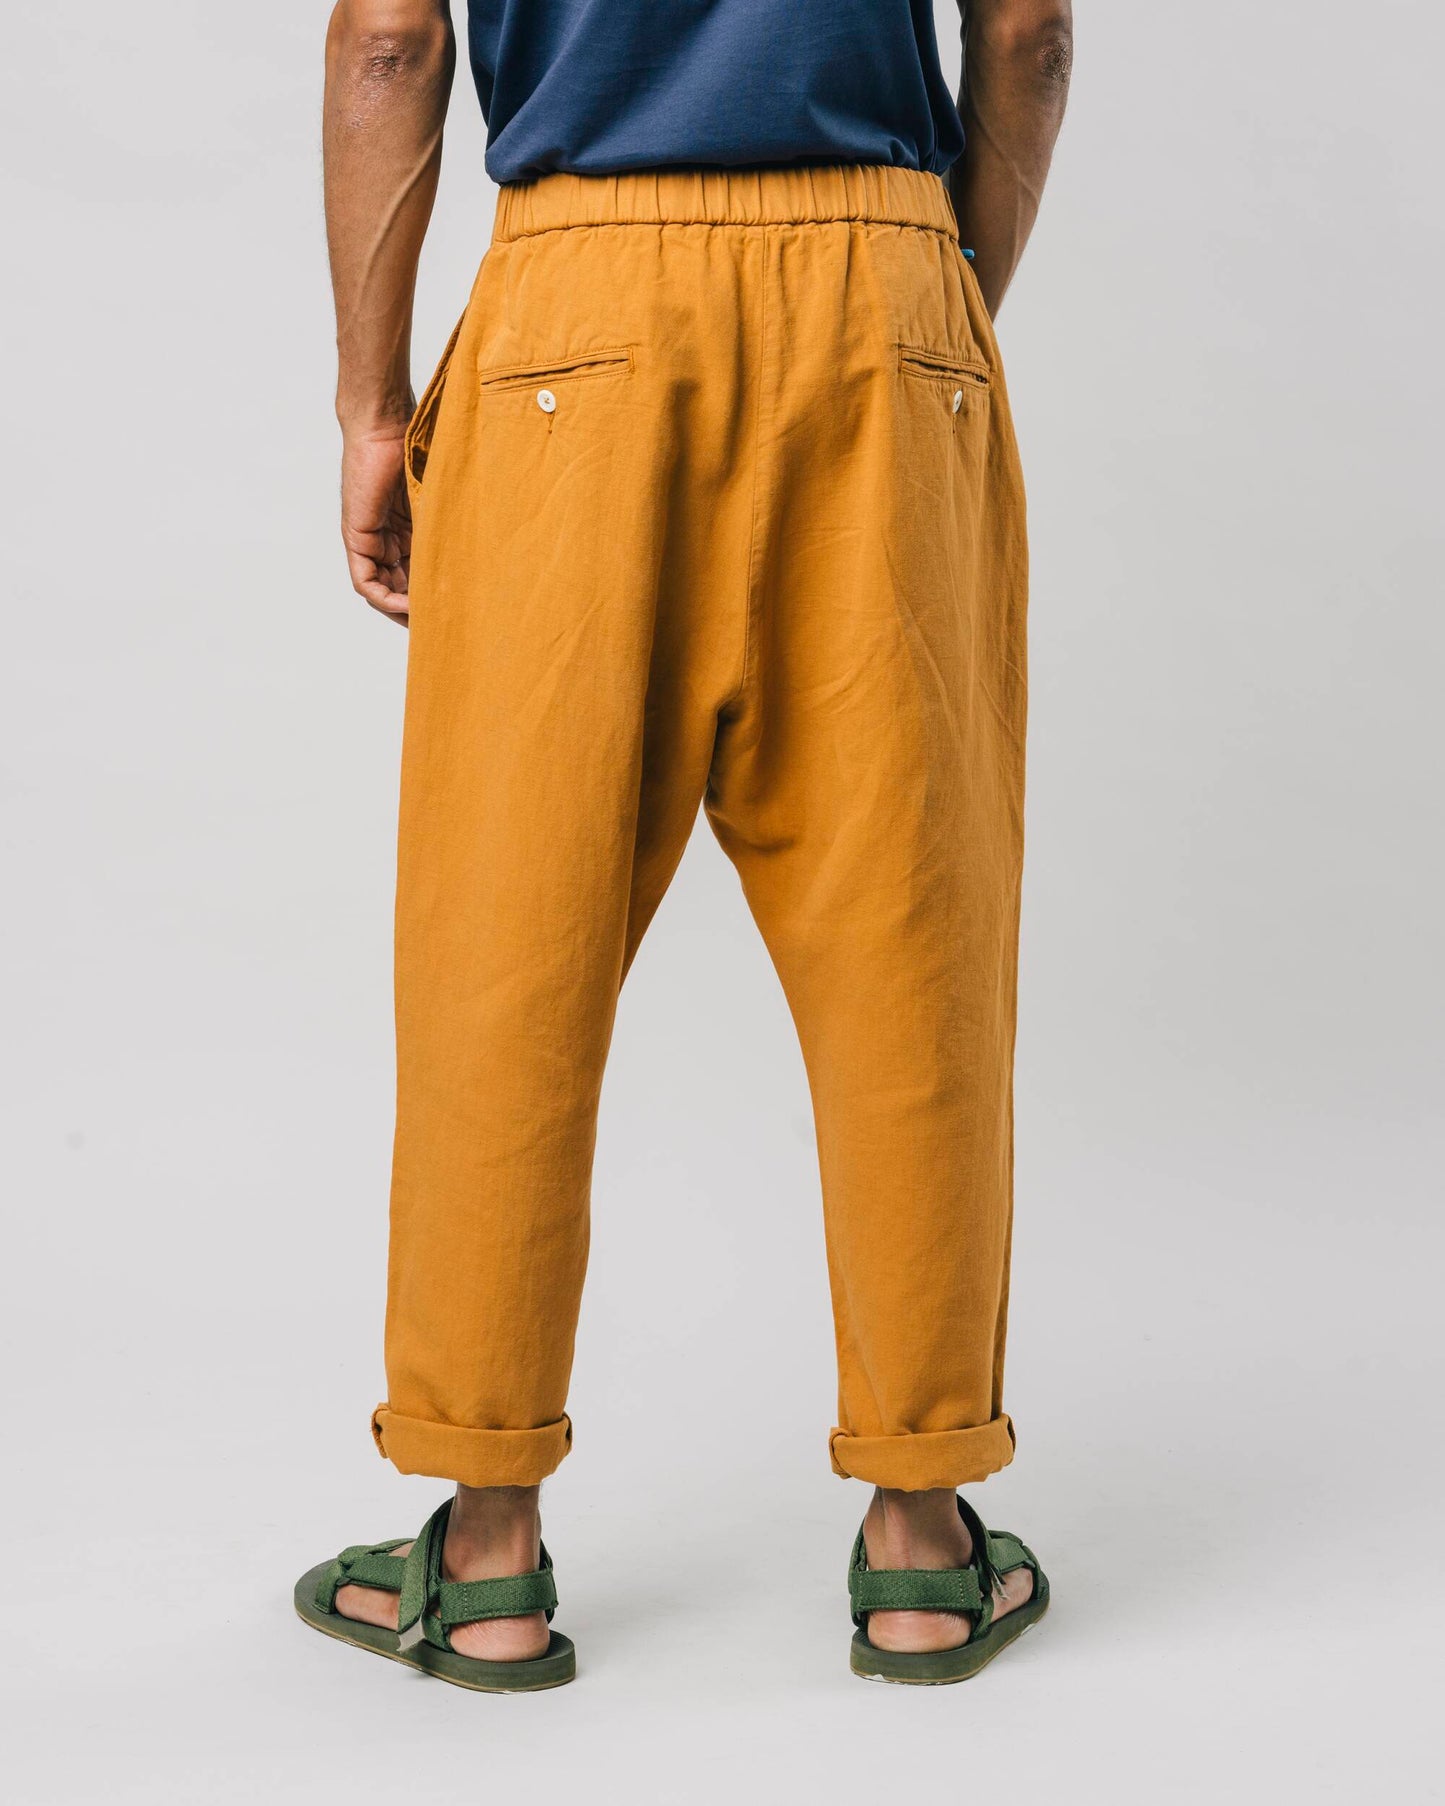 Inka Gold Pants